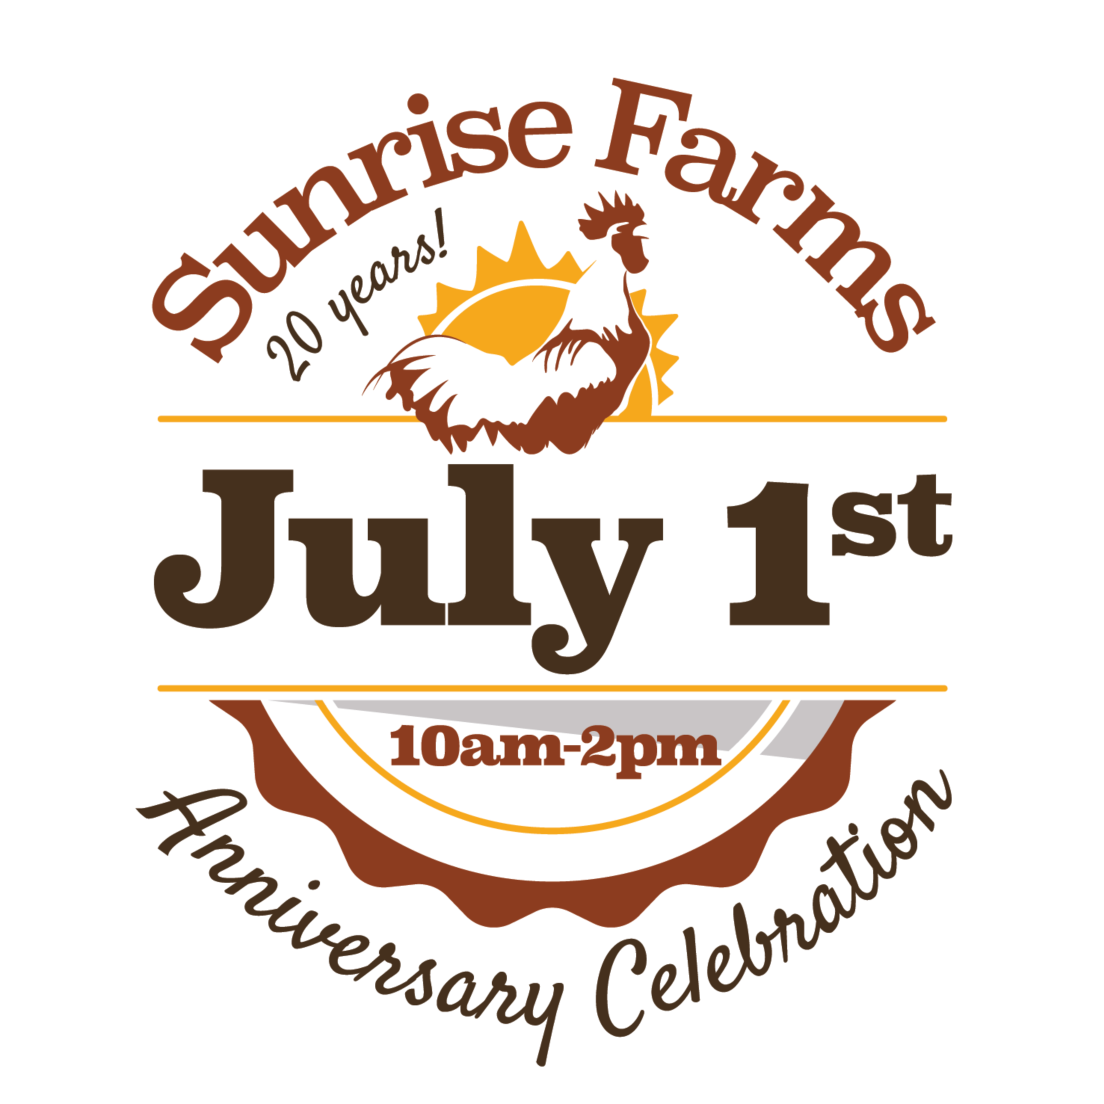 badge celebrating Sunrise Farms' 20th anniversary